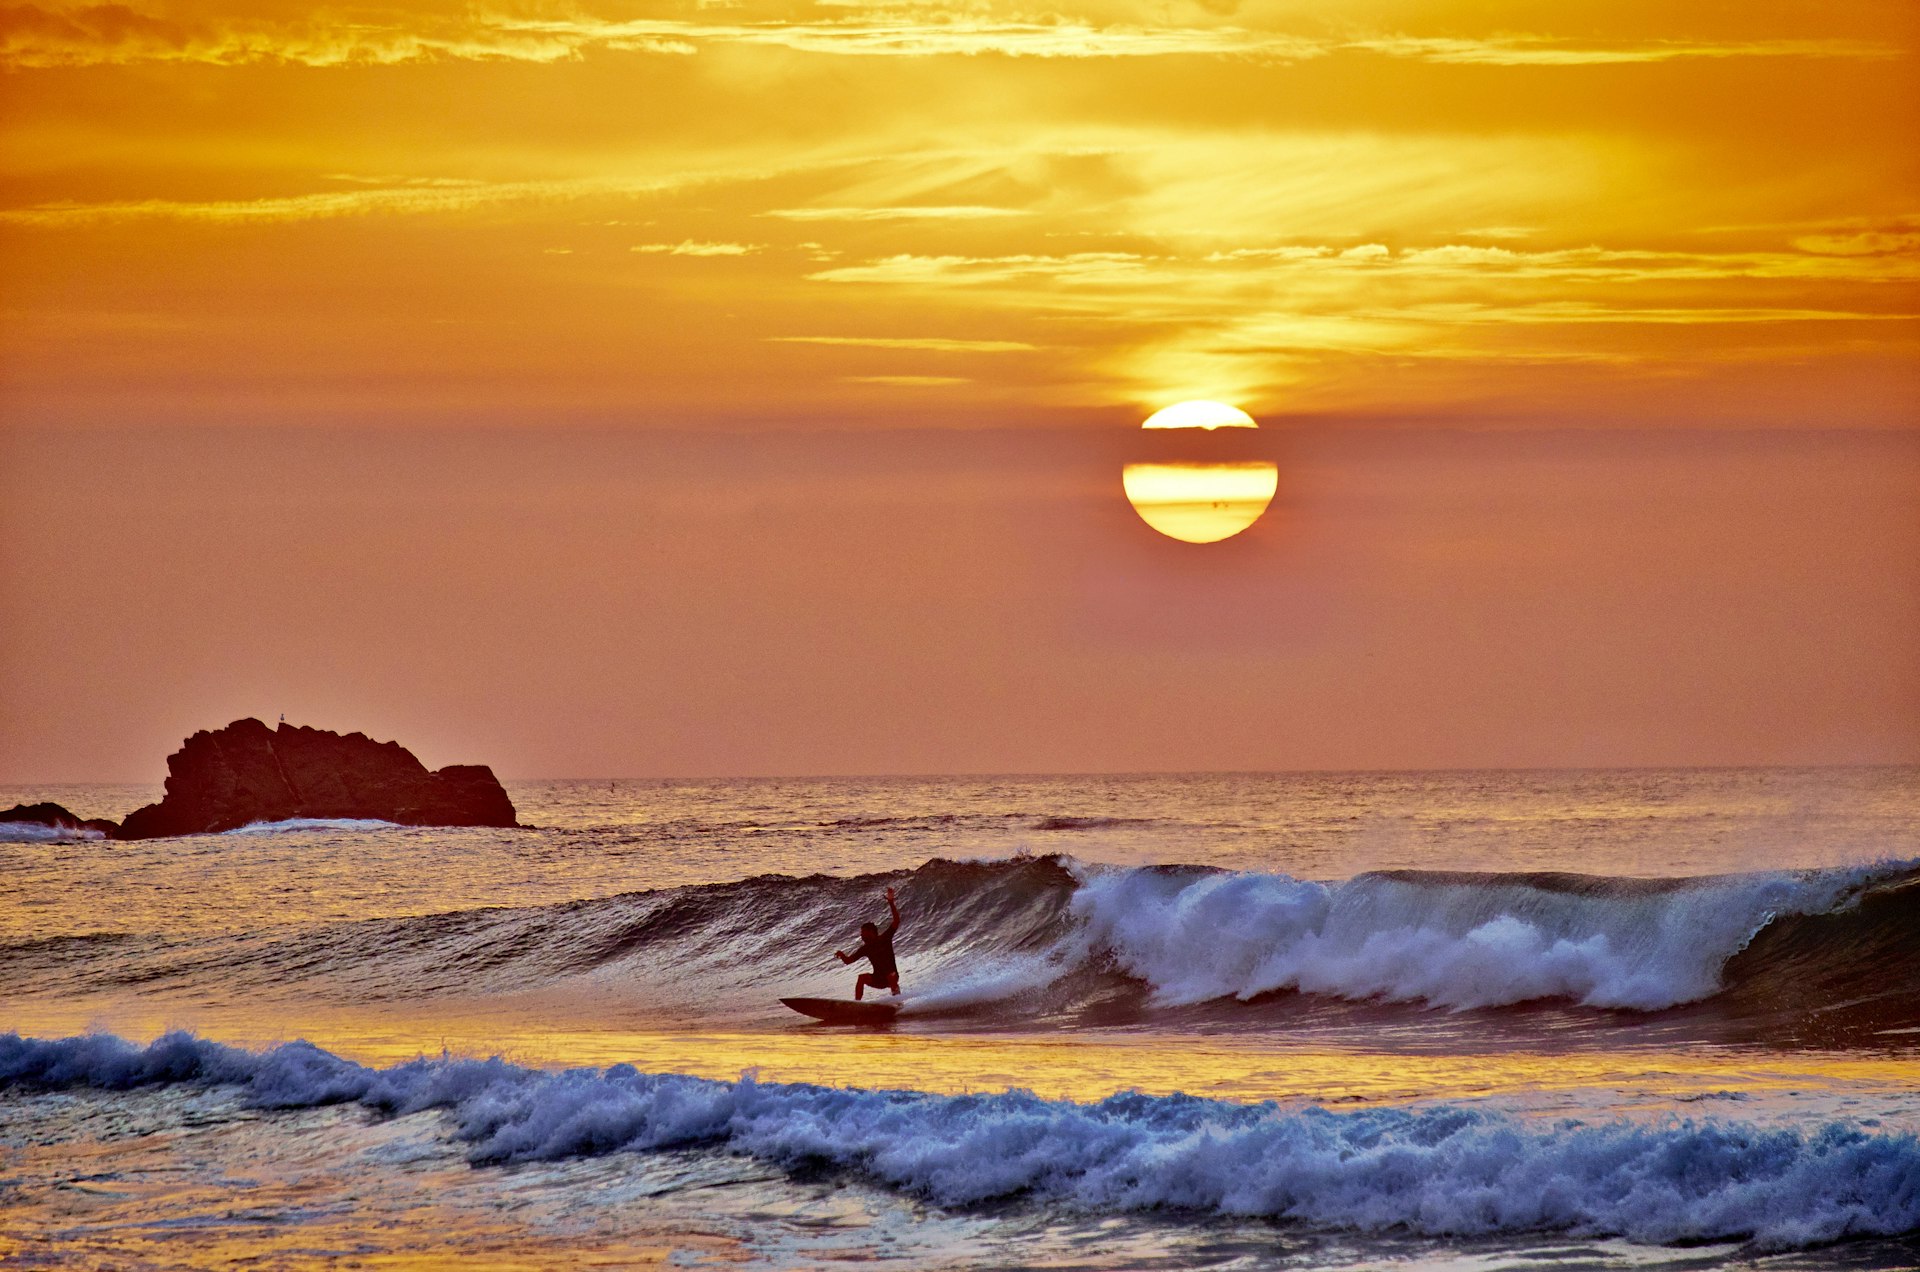 A surfer at sunset near Sagres in the Algarve 